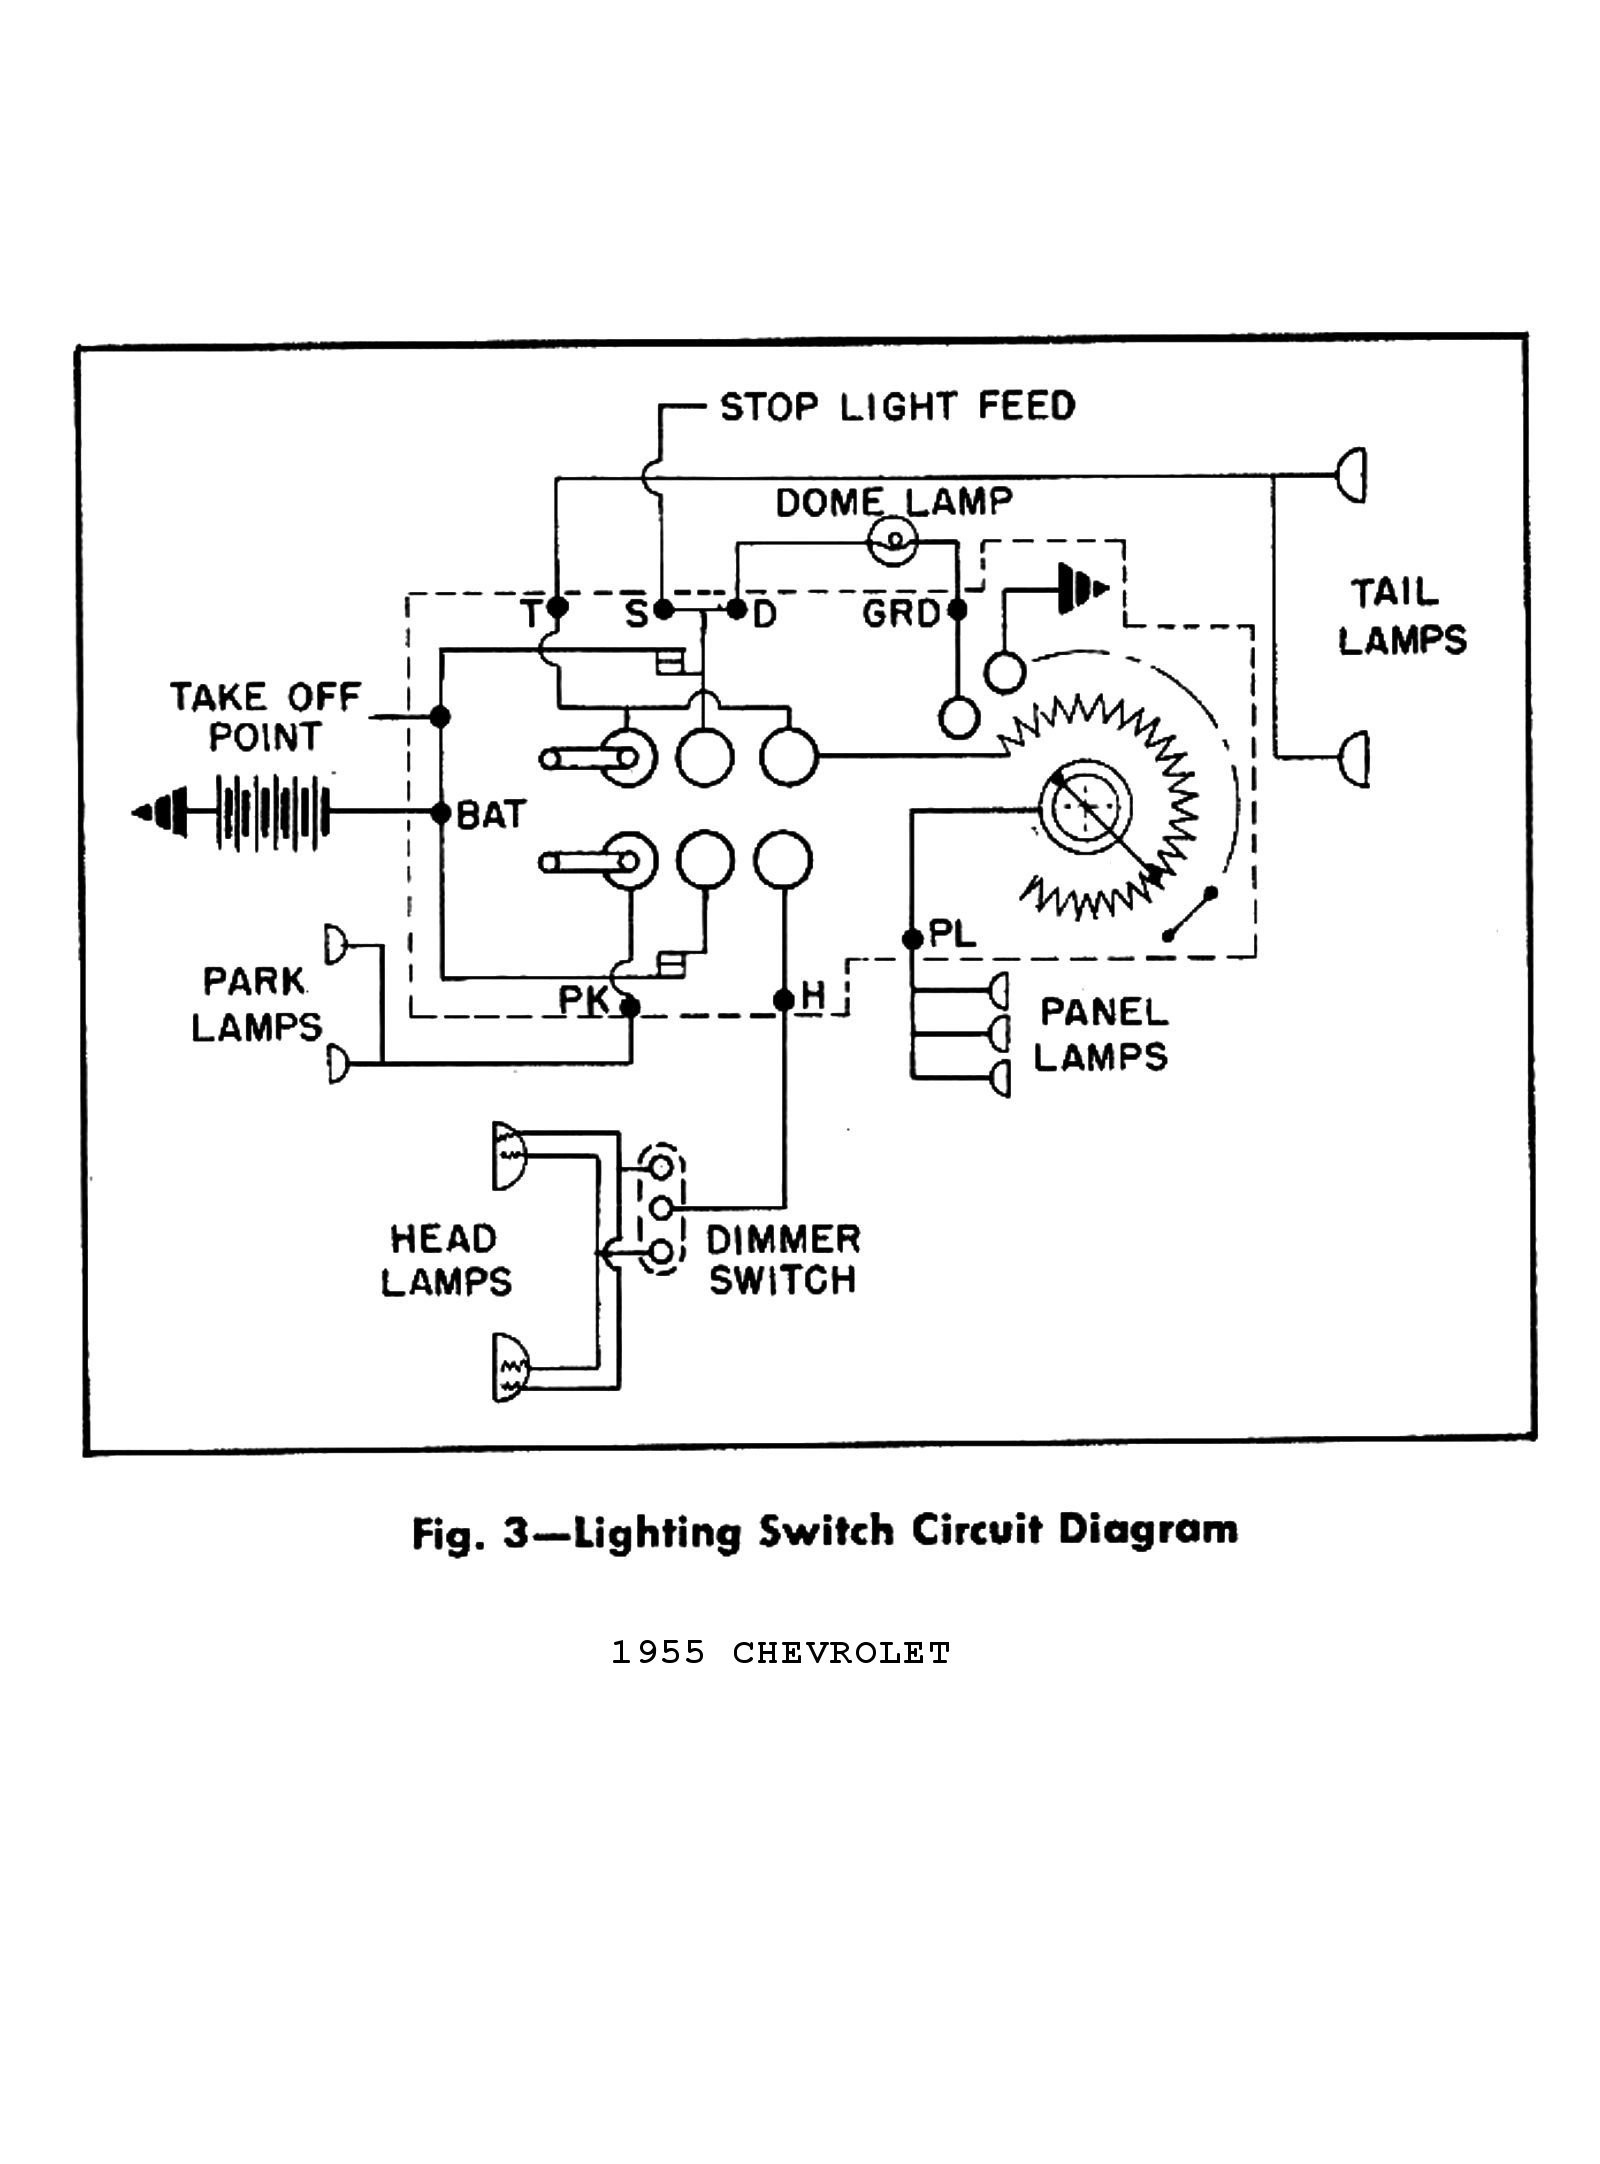 1955 Lighting Switch Circuit